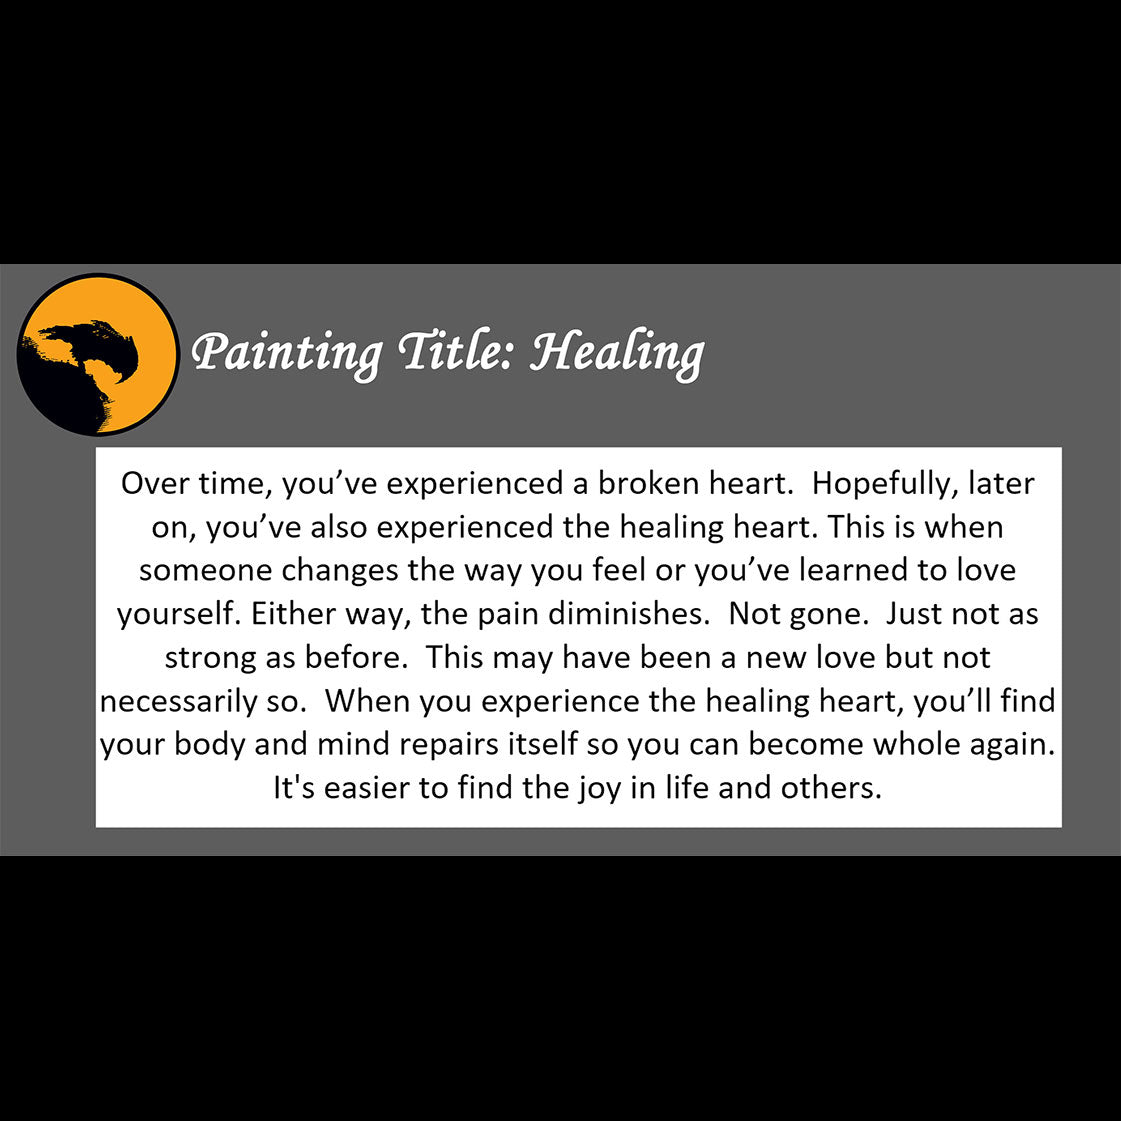 Healing - about dealing with heartbreak - 11x14, 11x17 Print